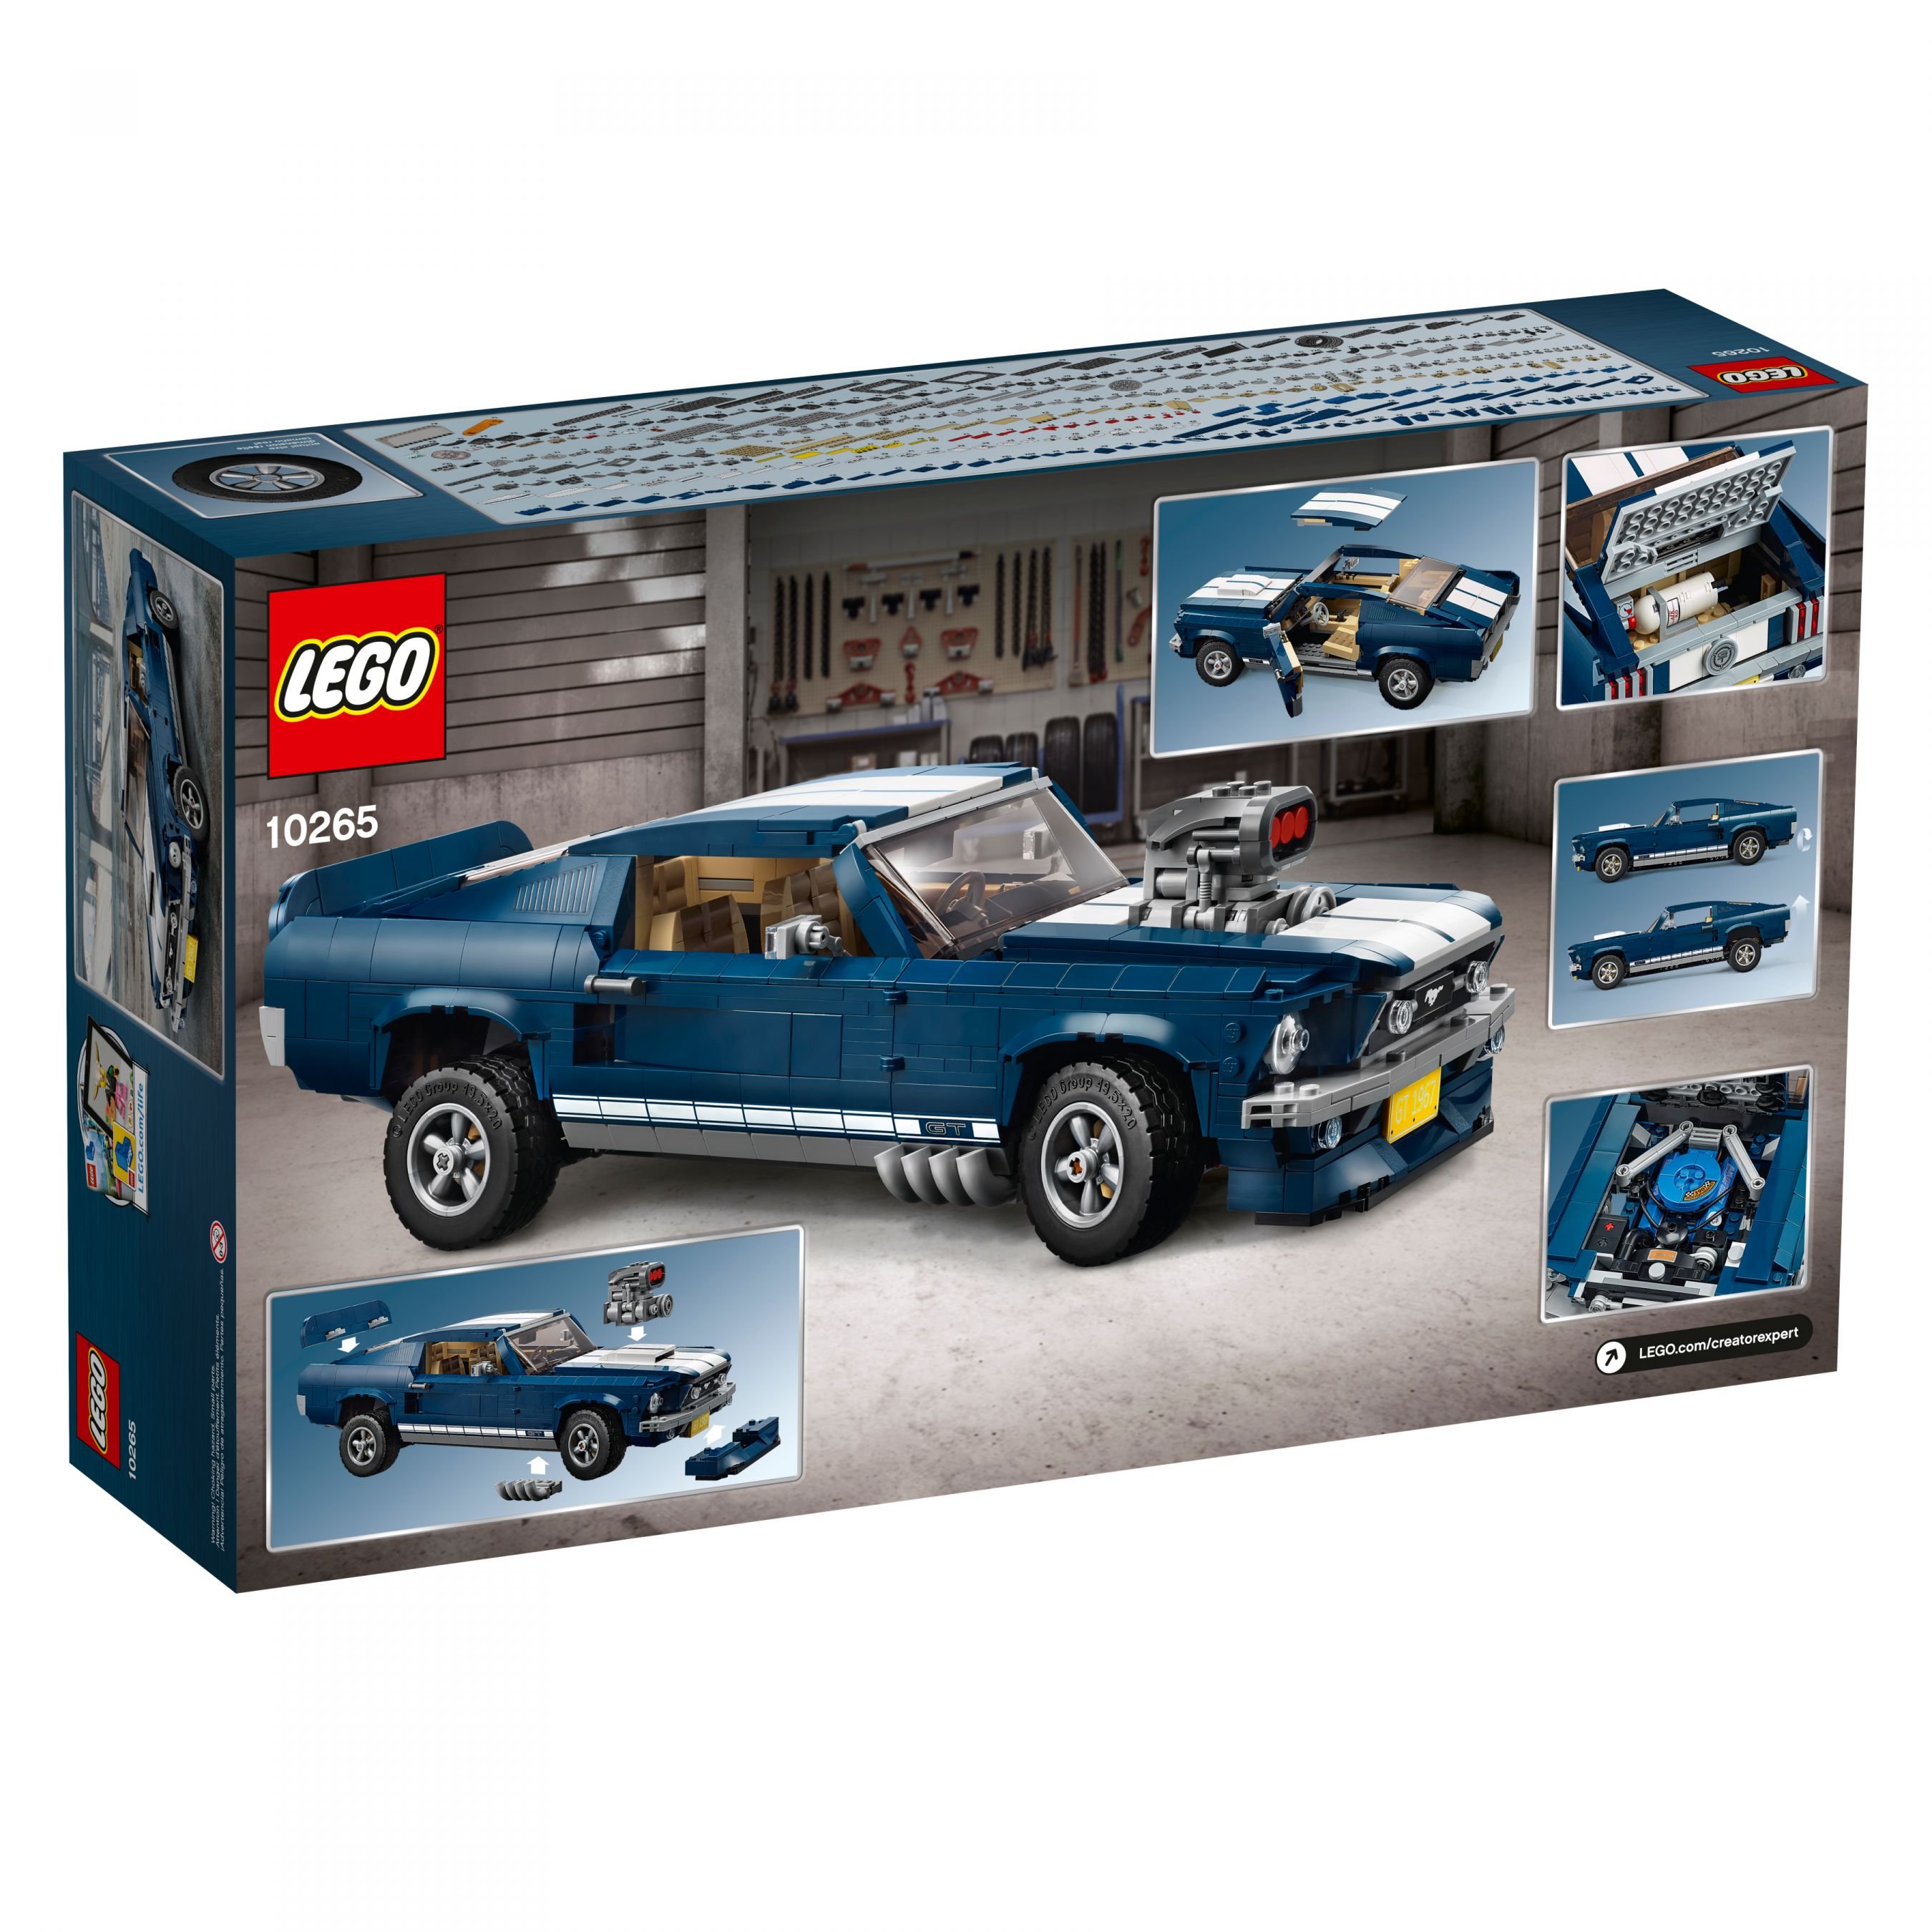 LEGO Advanced Models 10265 Ford Mustang GT LEGO_10265_alt5.jpg